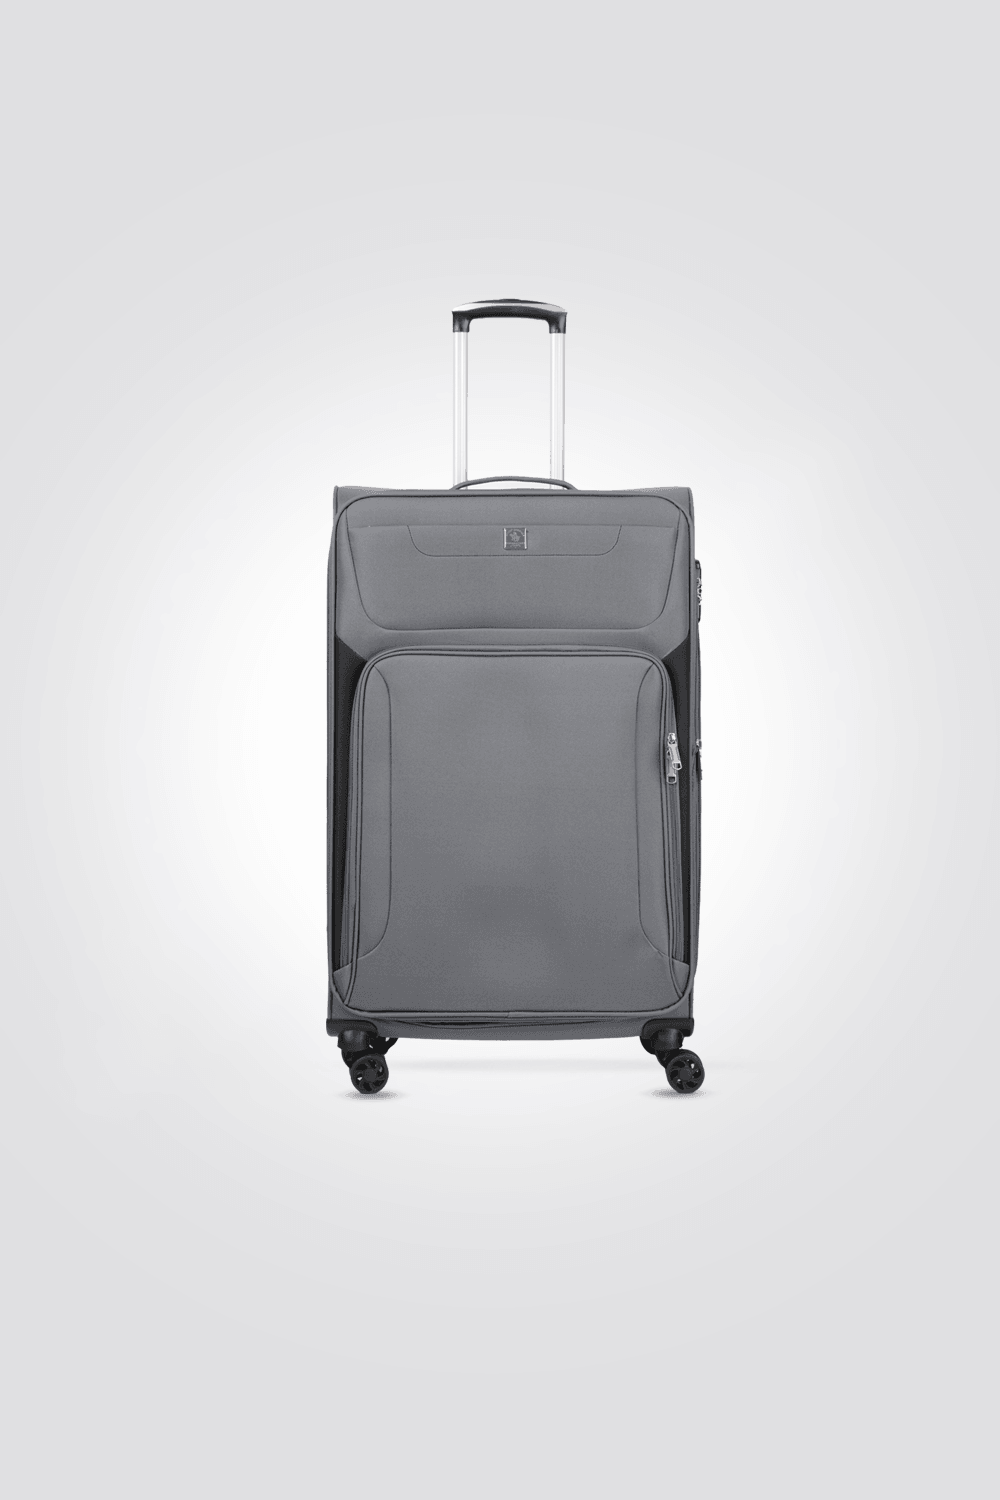 SANTA BARBARA POLO & RAQUET CLUB - סט מזוודות FLORIDA בצבע אפור כהה - MASHBIR//365